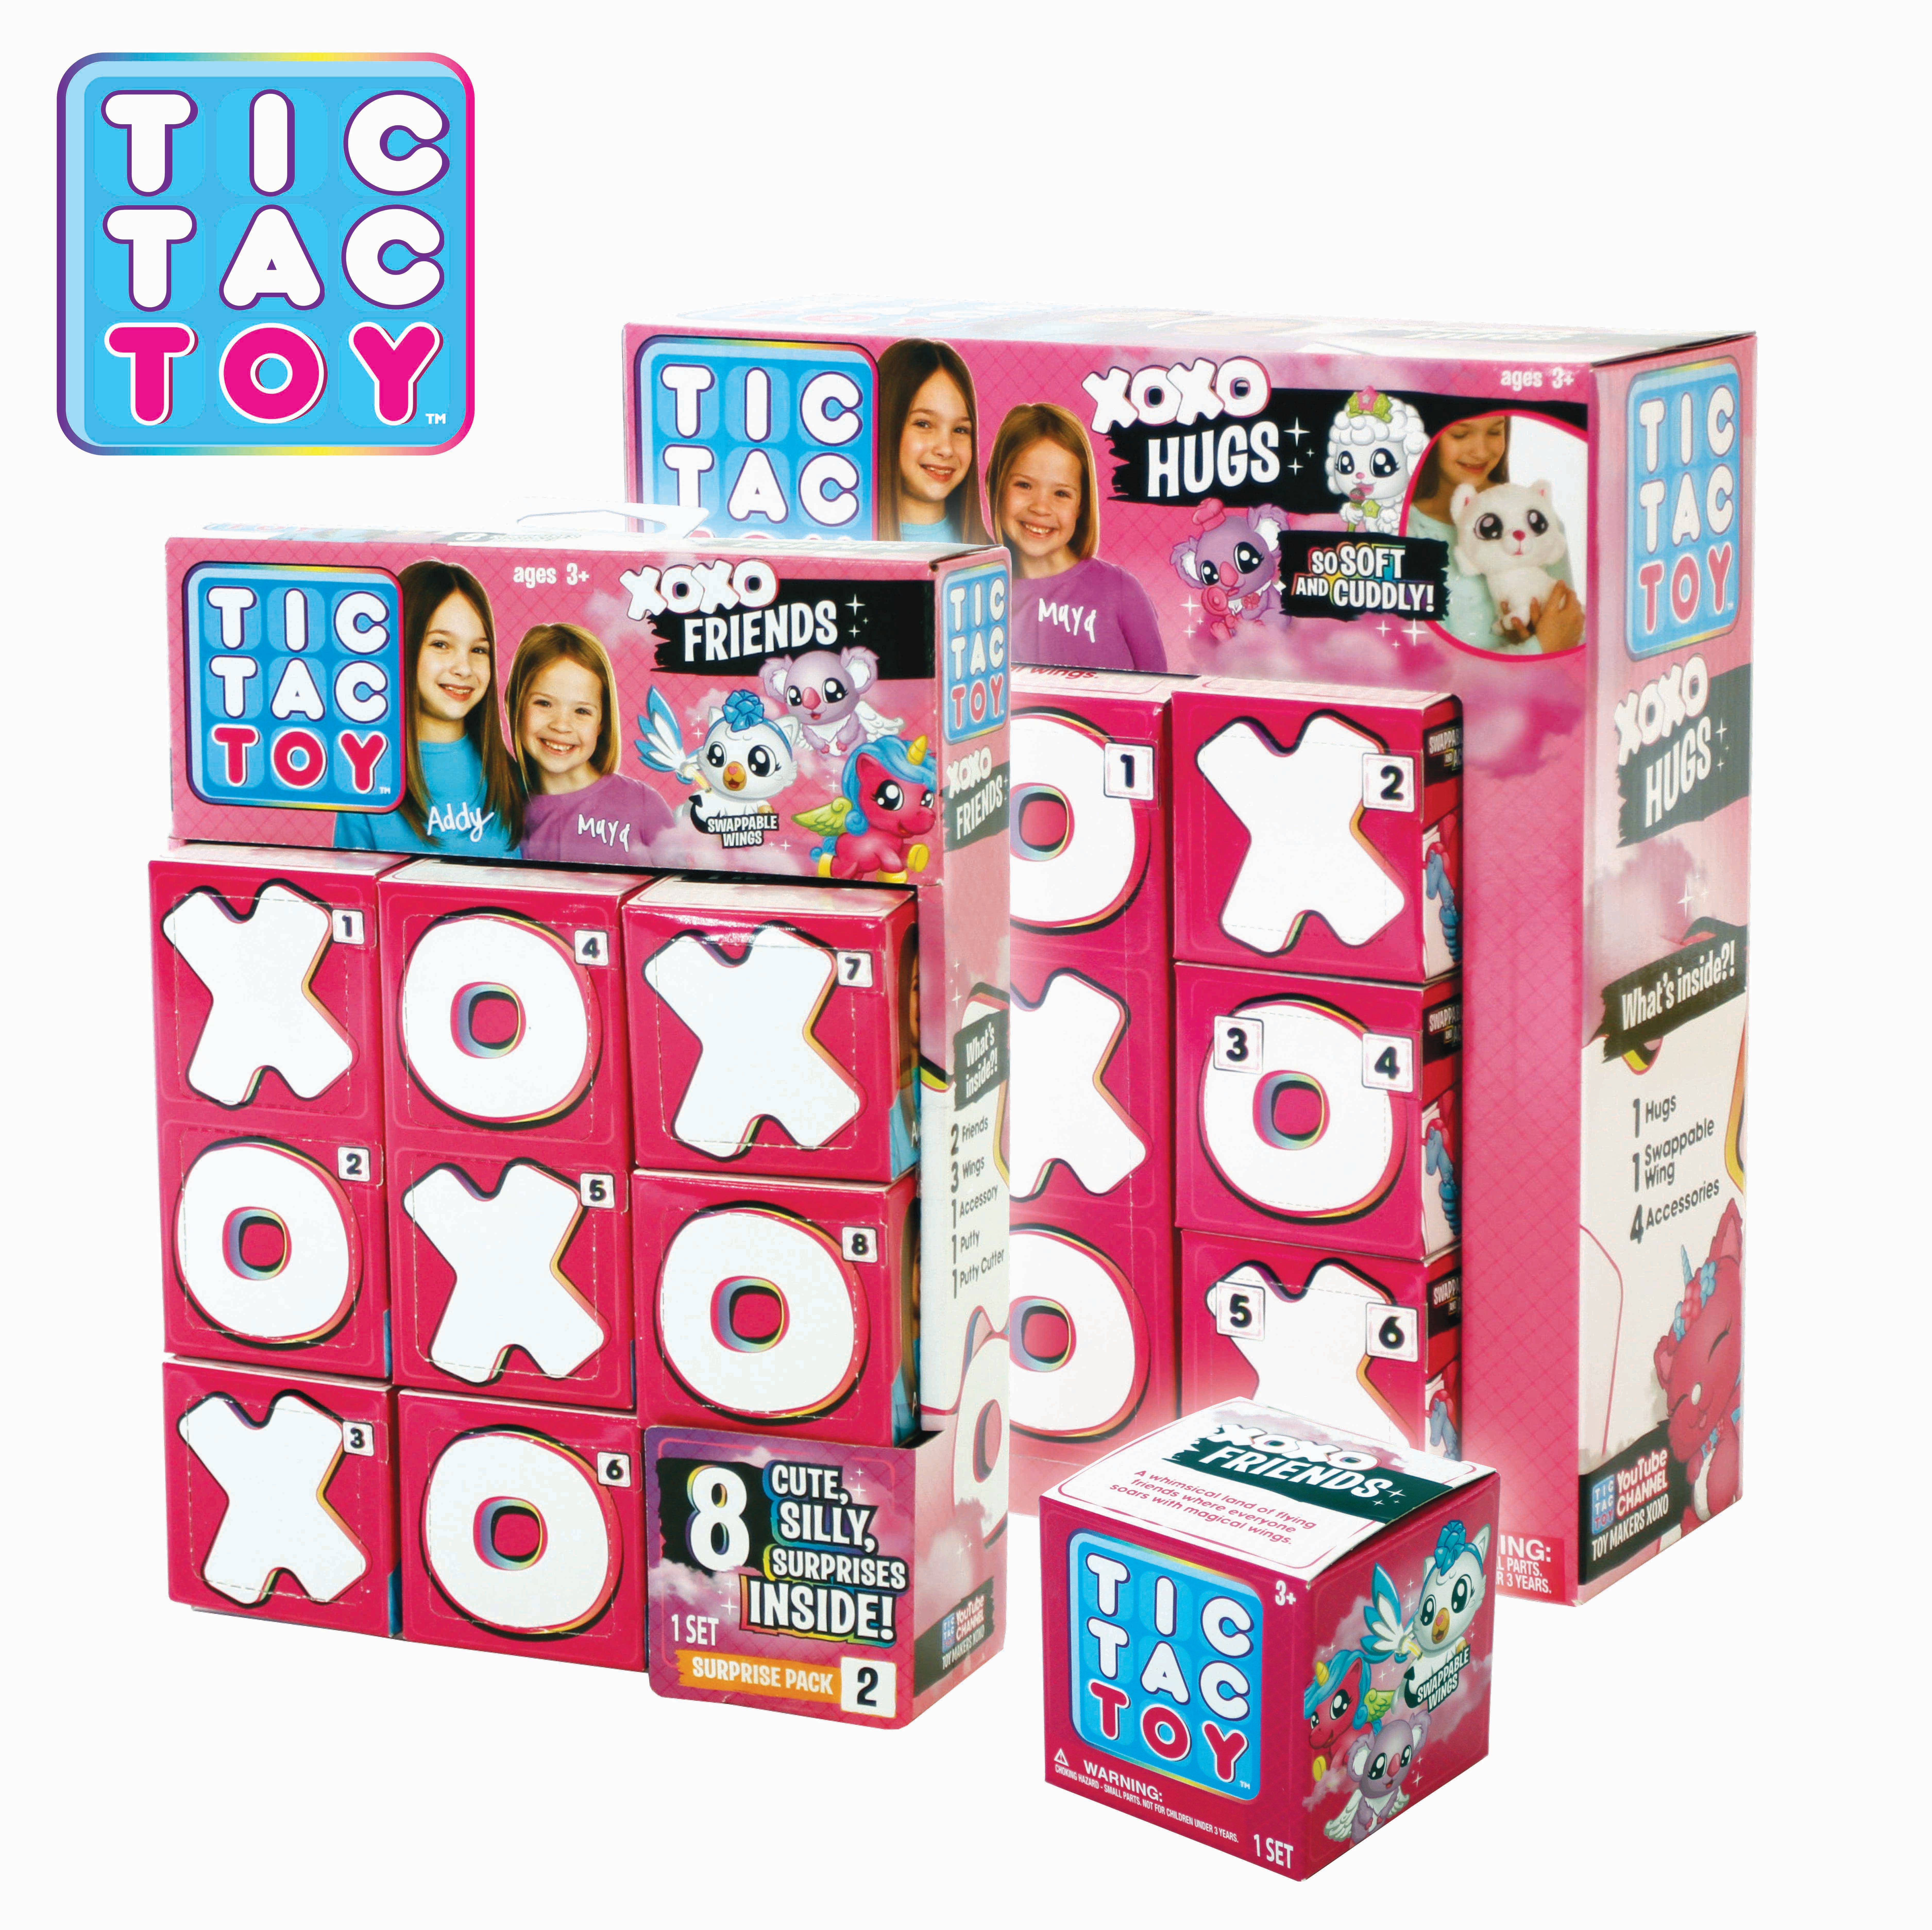 play tic tac toy videos